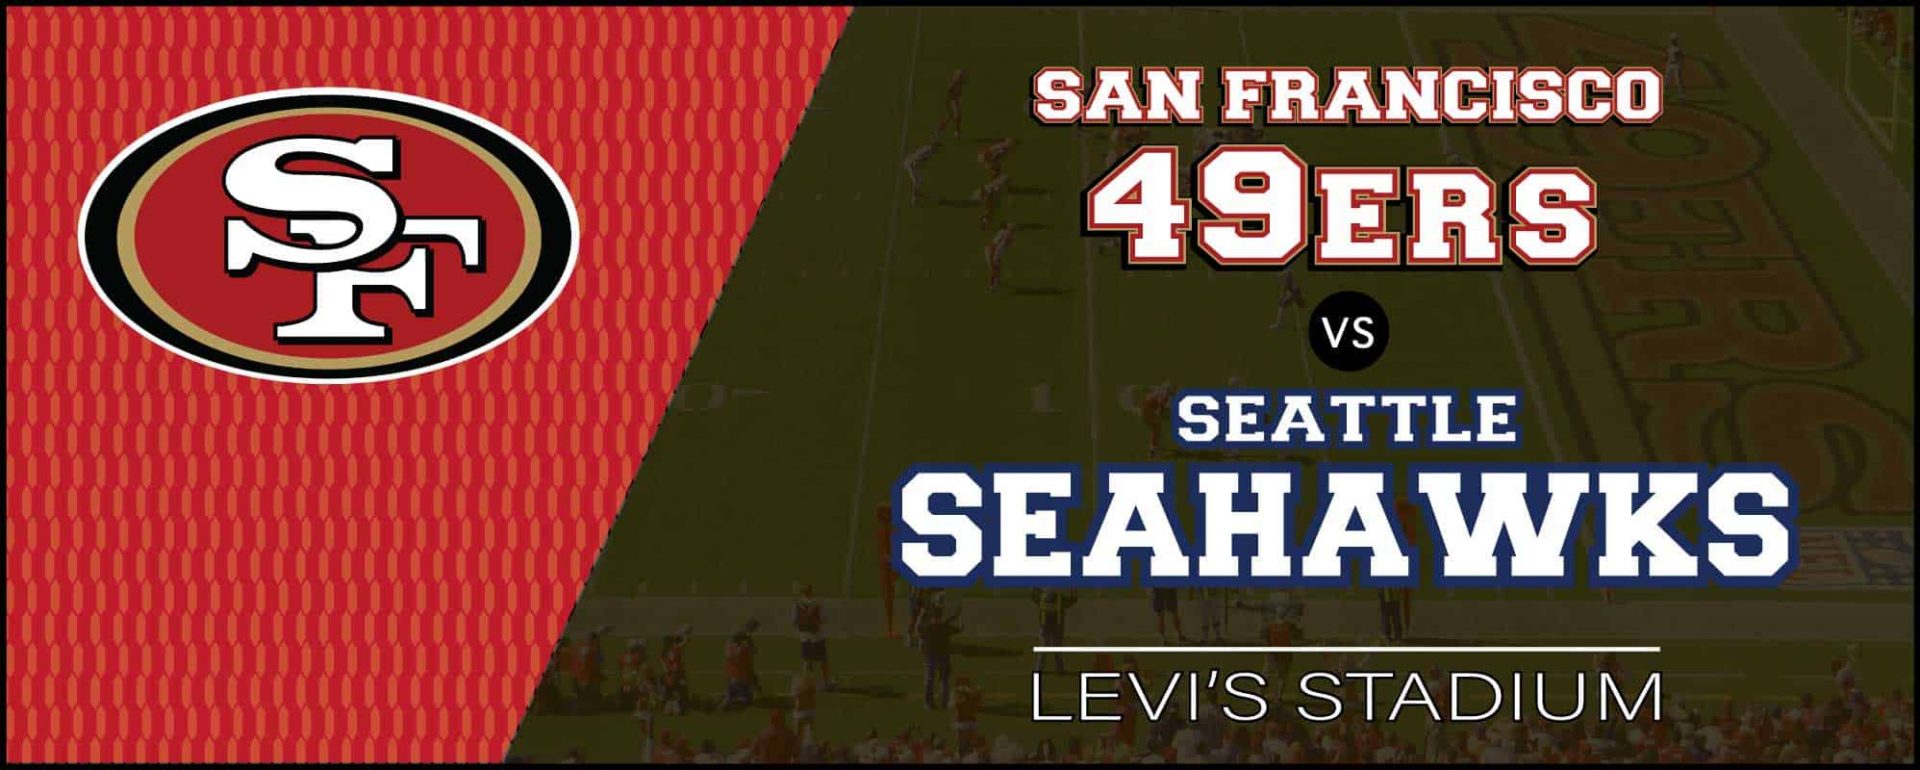 49ers vs. Seahawks at Levi's Stadium